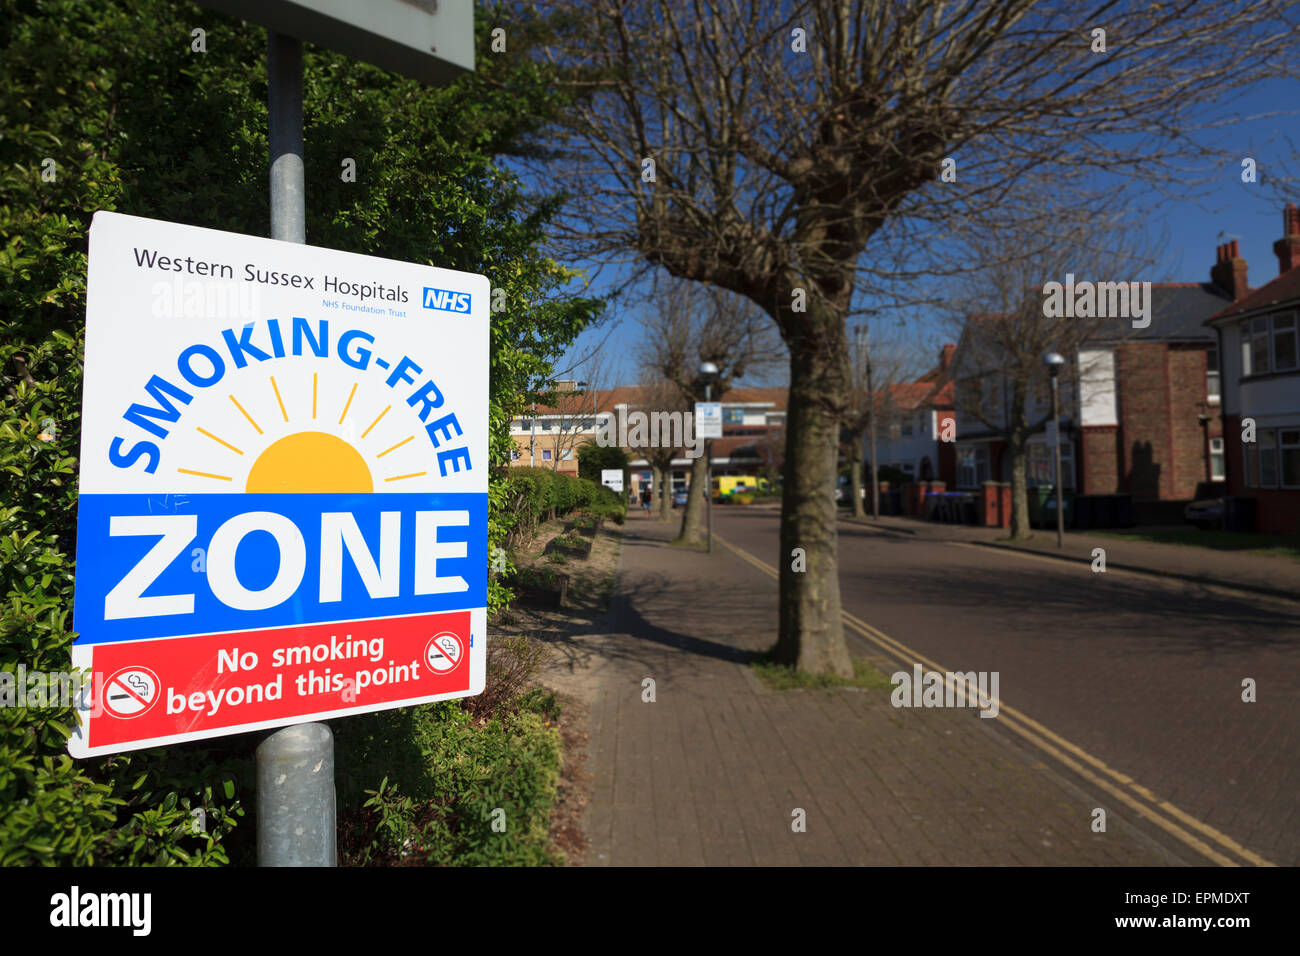 Hospital smoking-free zone sign at entrance to hospital Stock Photo